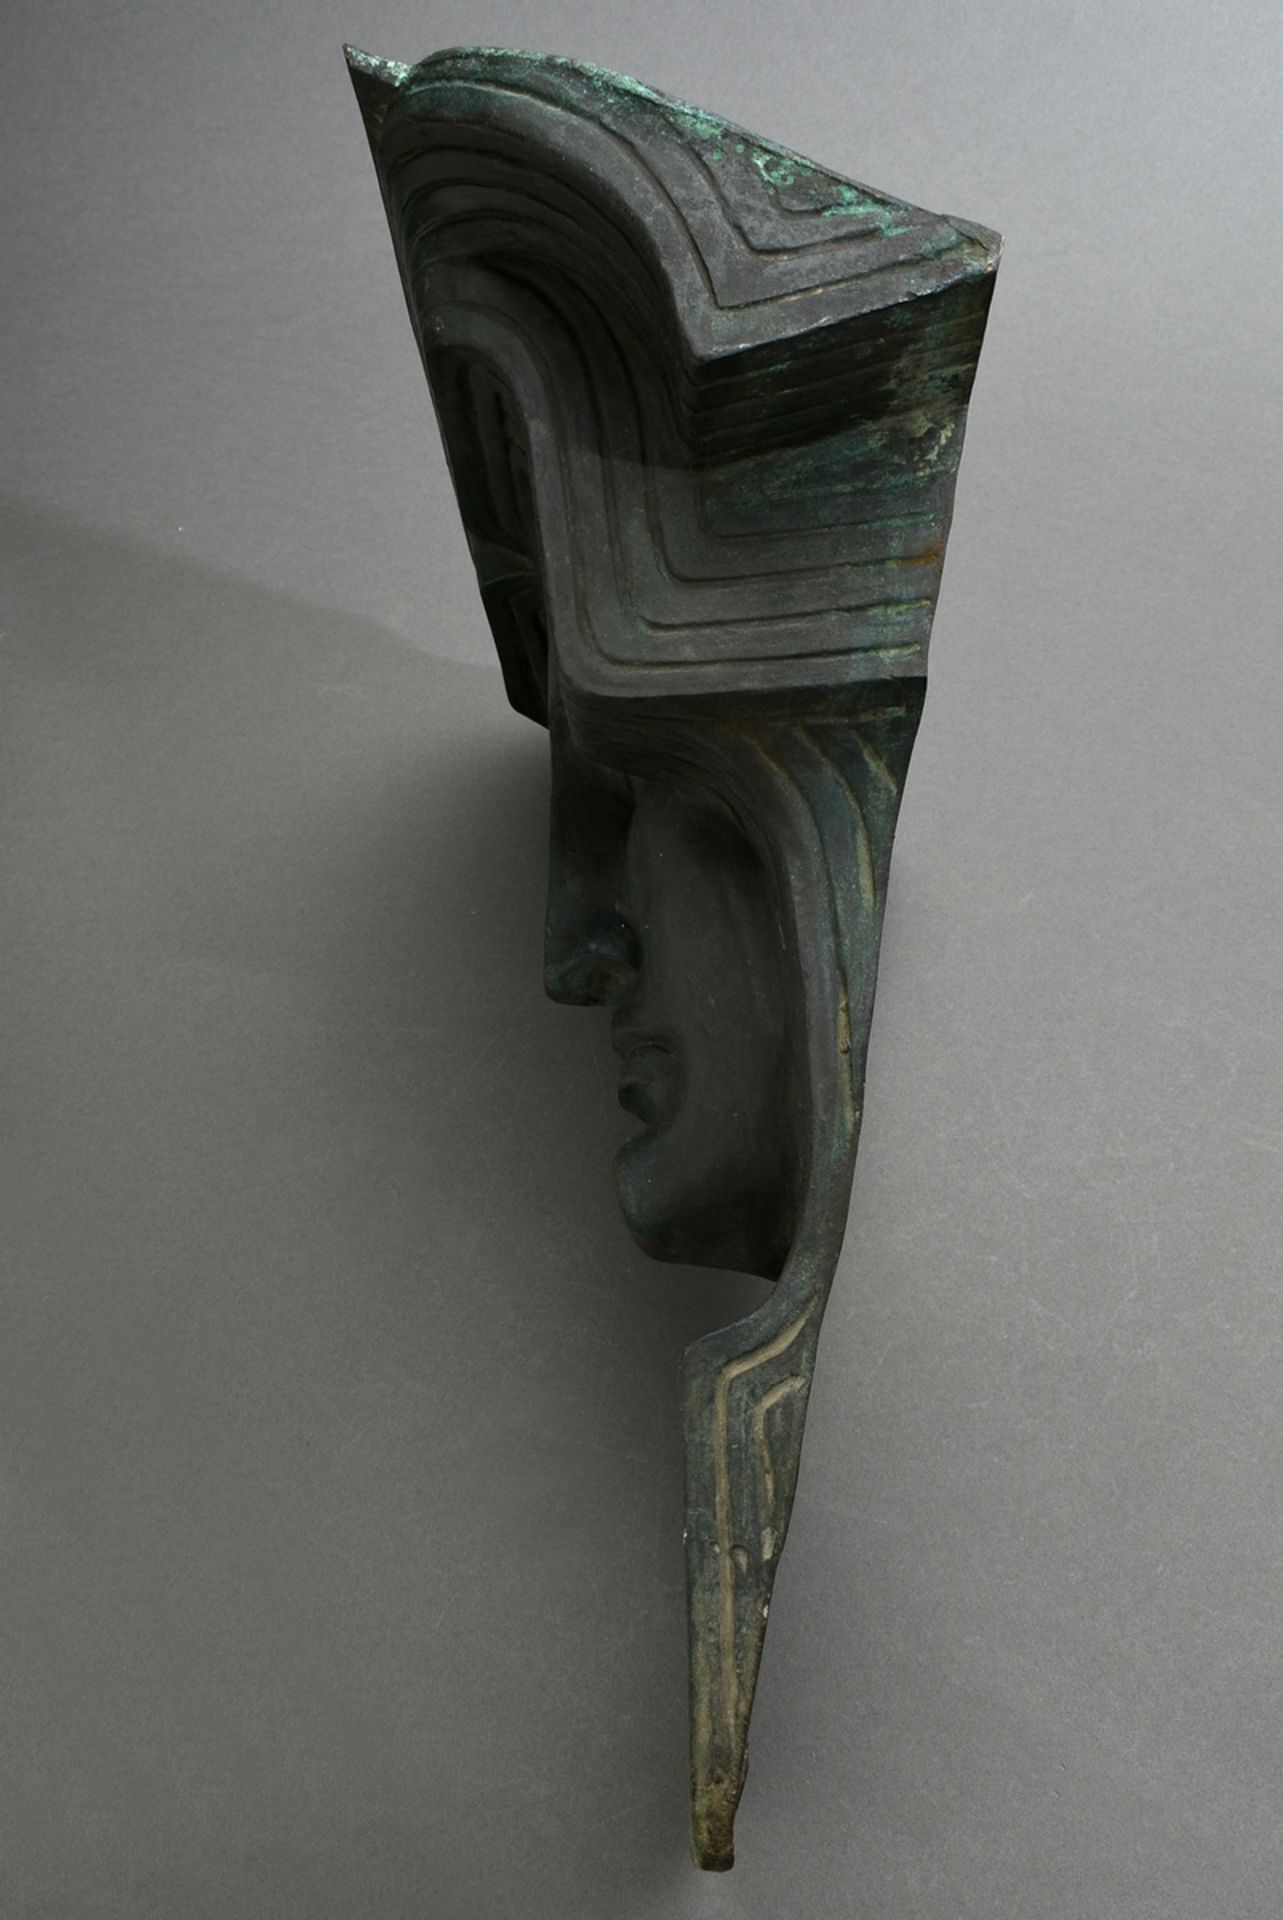 Bock, Arthur (1875-1957) "Large Head", bronze architectural sculpture in abstract Art Nouveau façon - Image 3 of 4